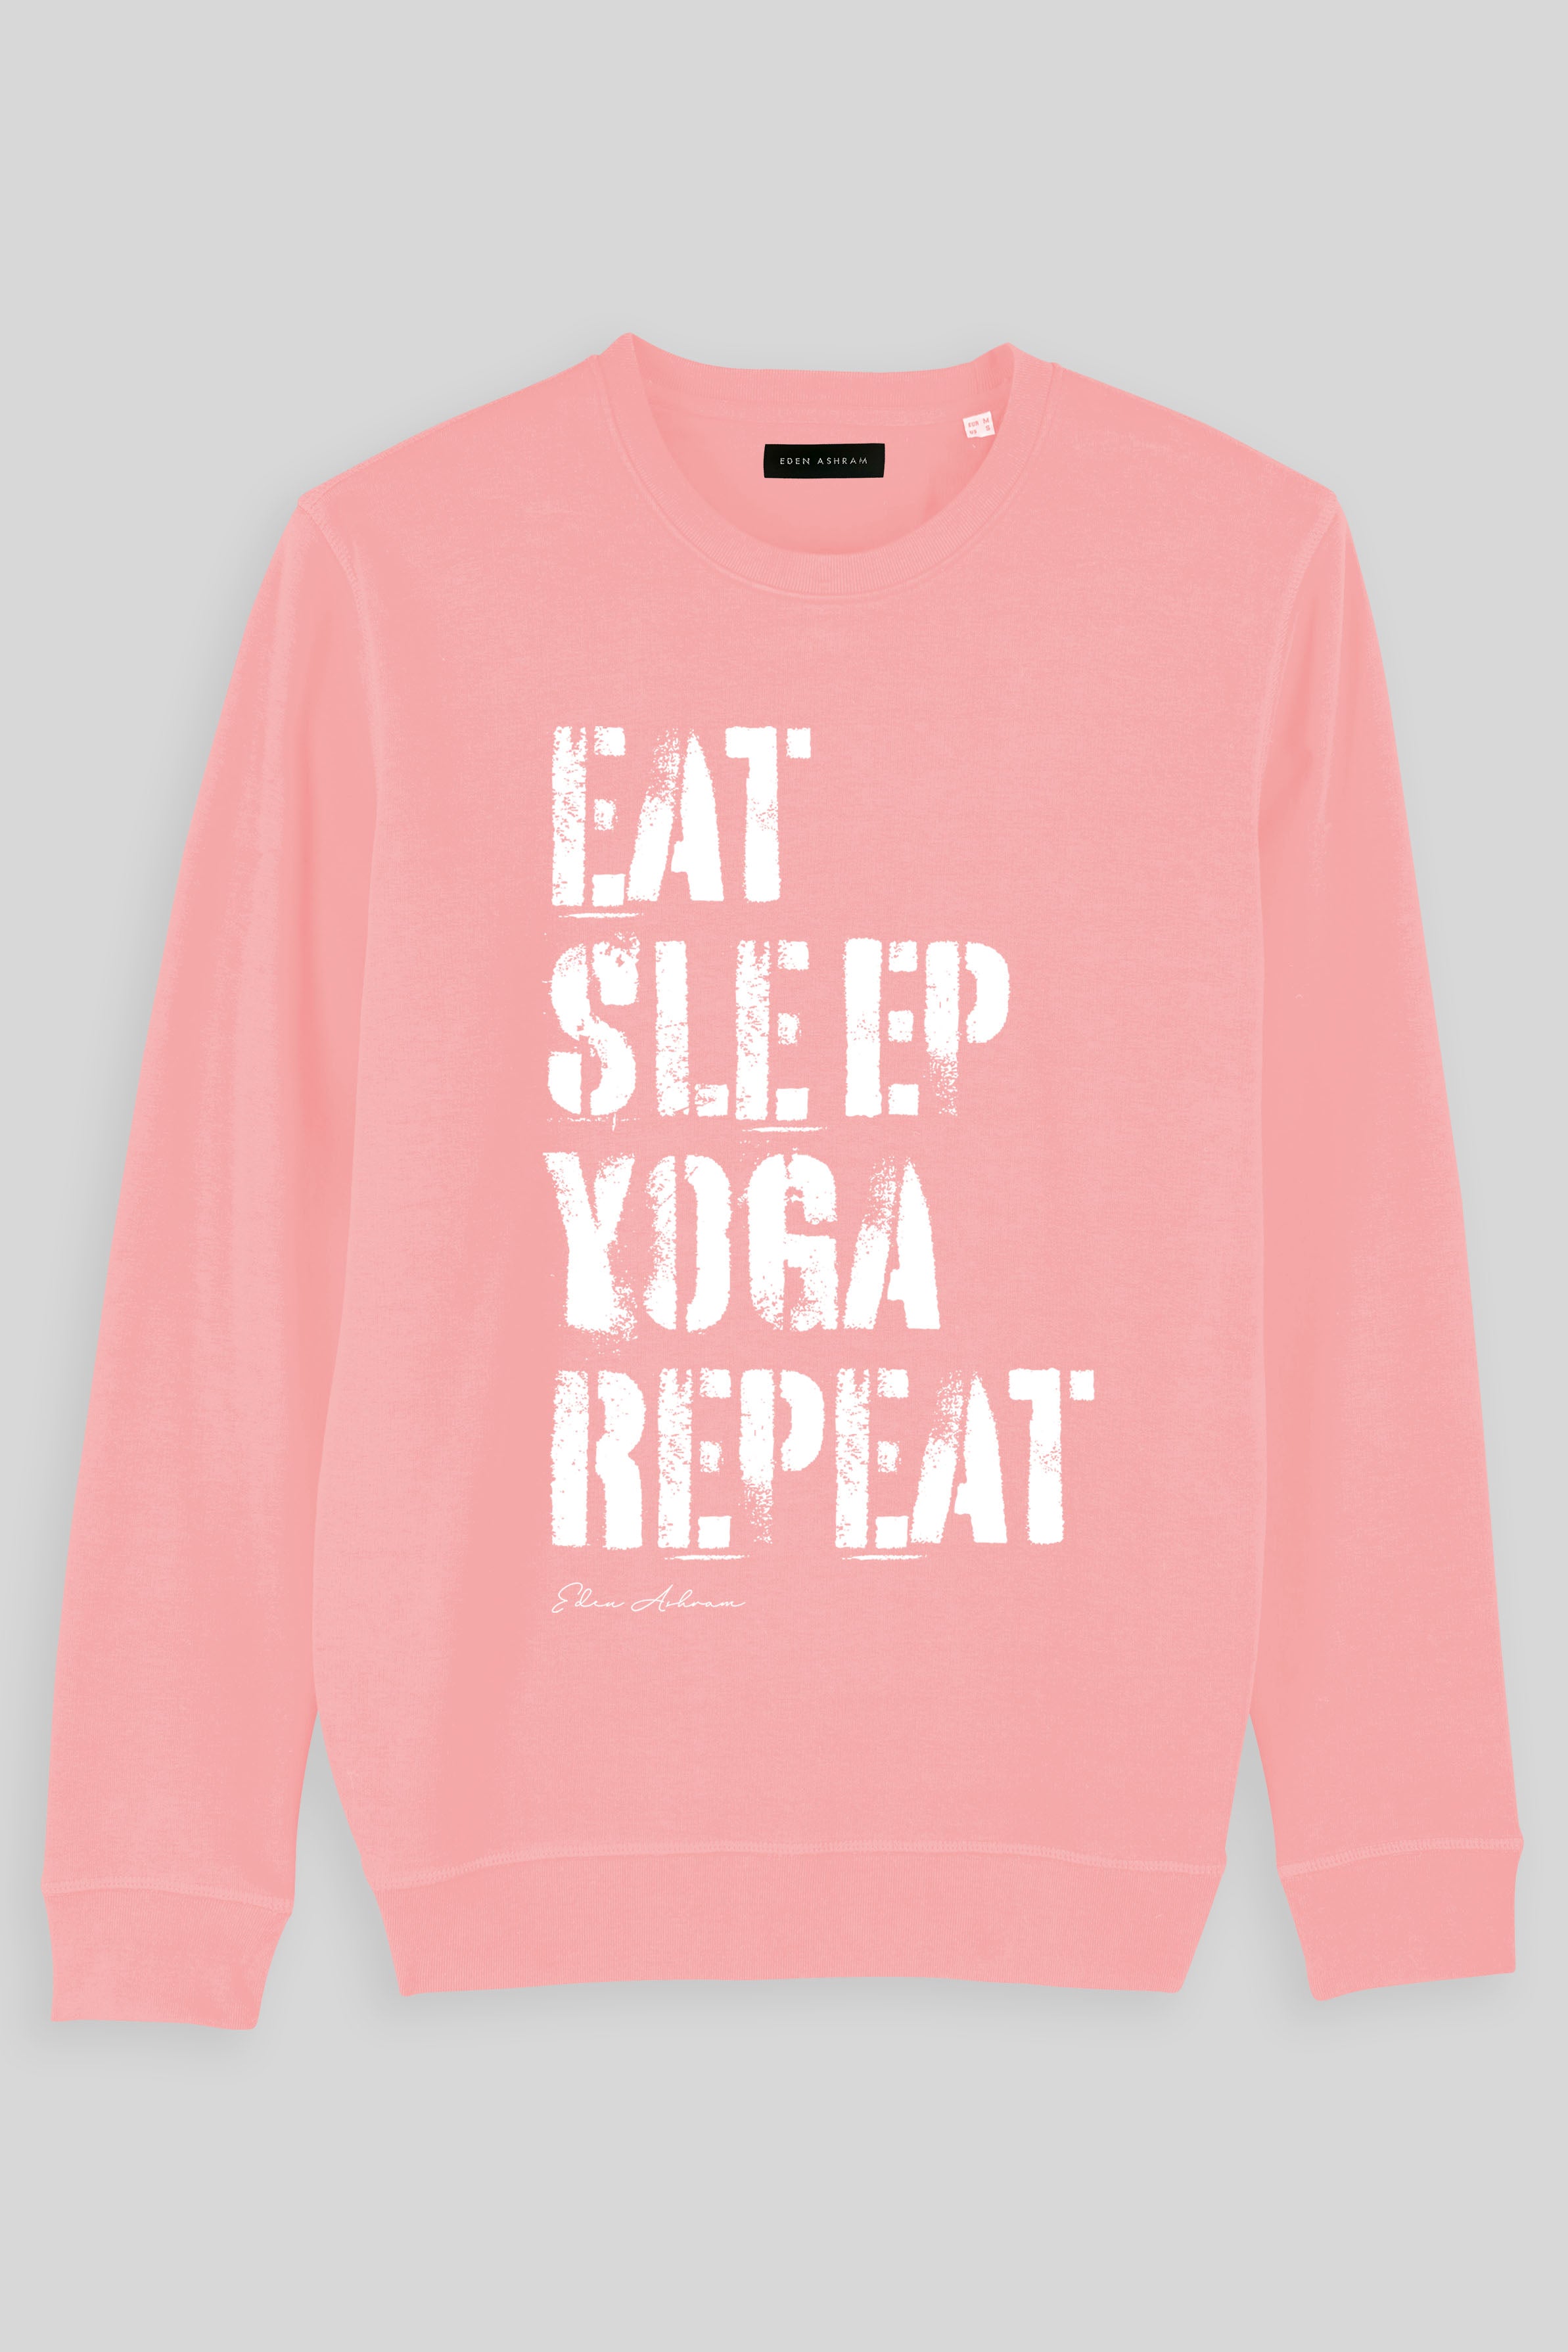 Eden Ashram Eat, Sleep, Yoga Repeat Premium Crew Neck Sweatshirt Coral Pink